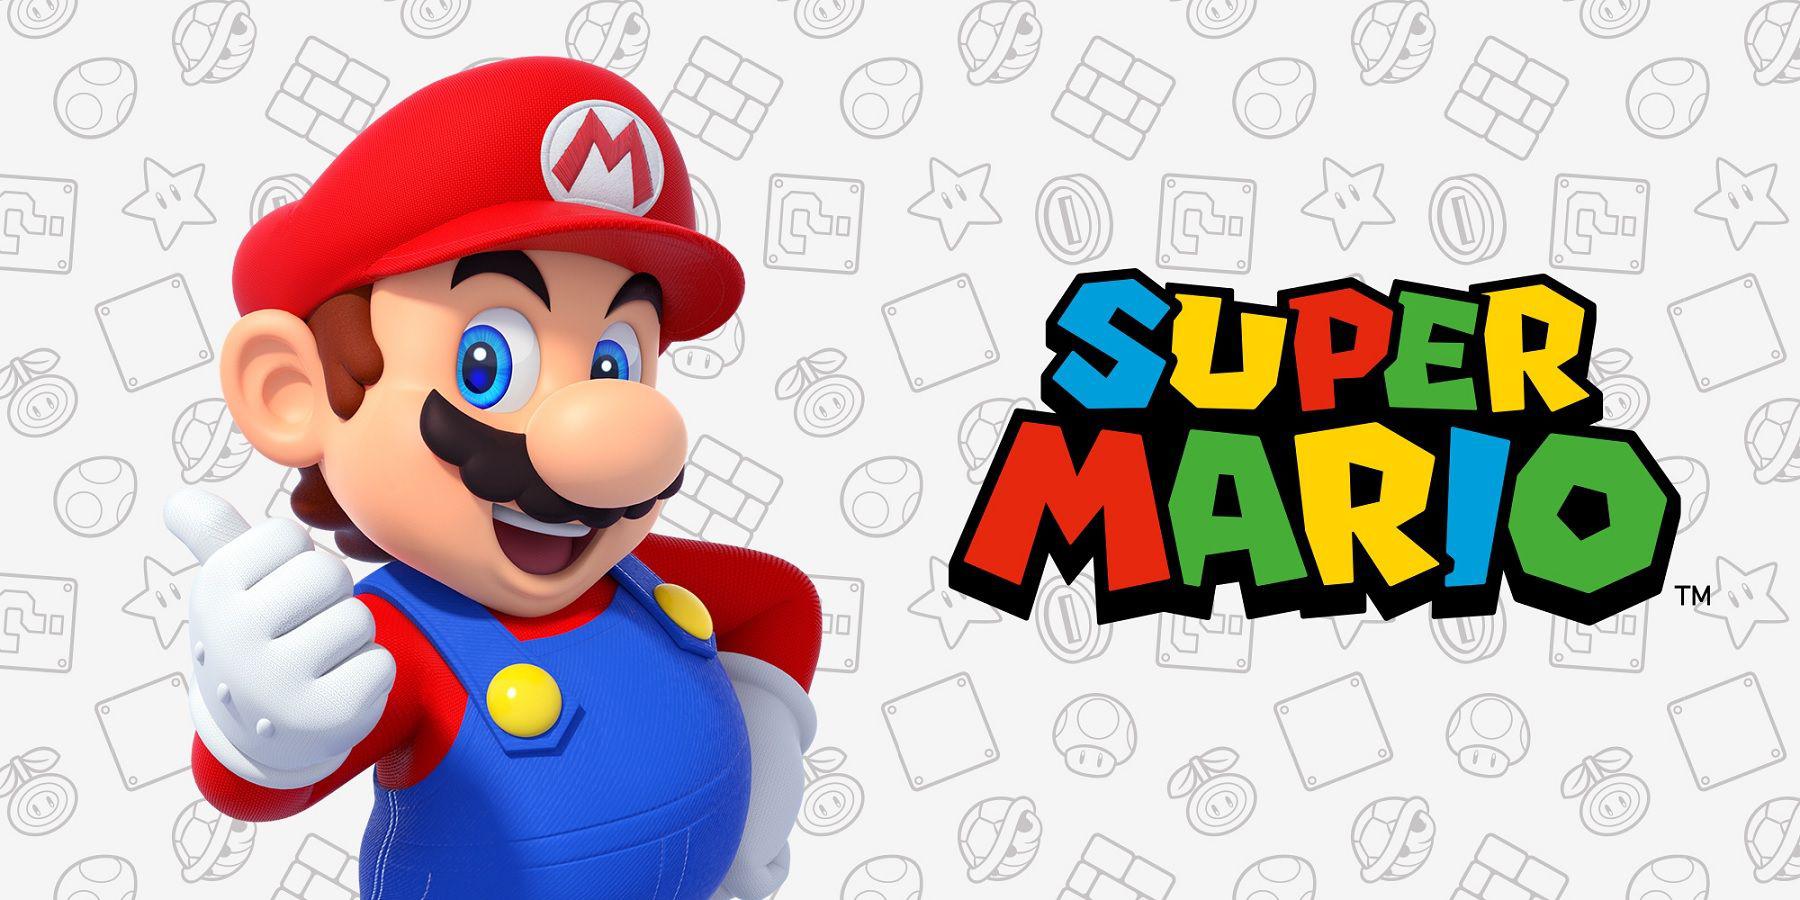 Todos os rumores e vazamentos de novos jogos do Super Mario